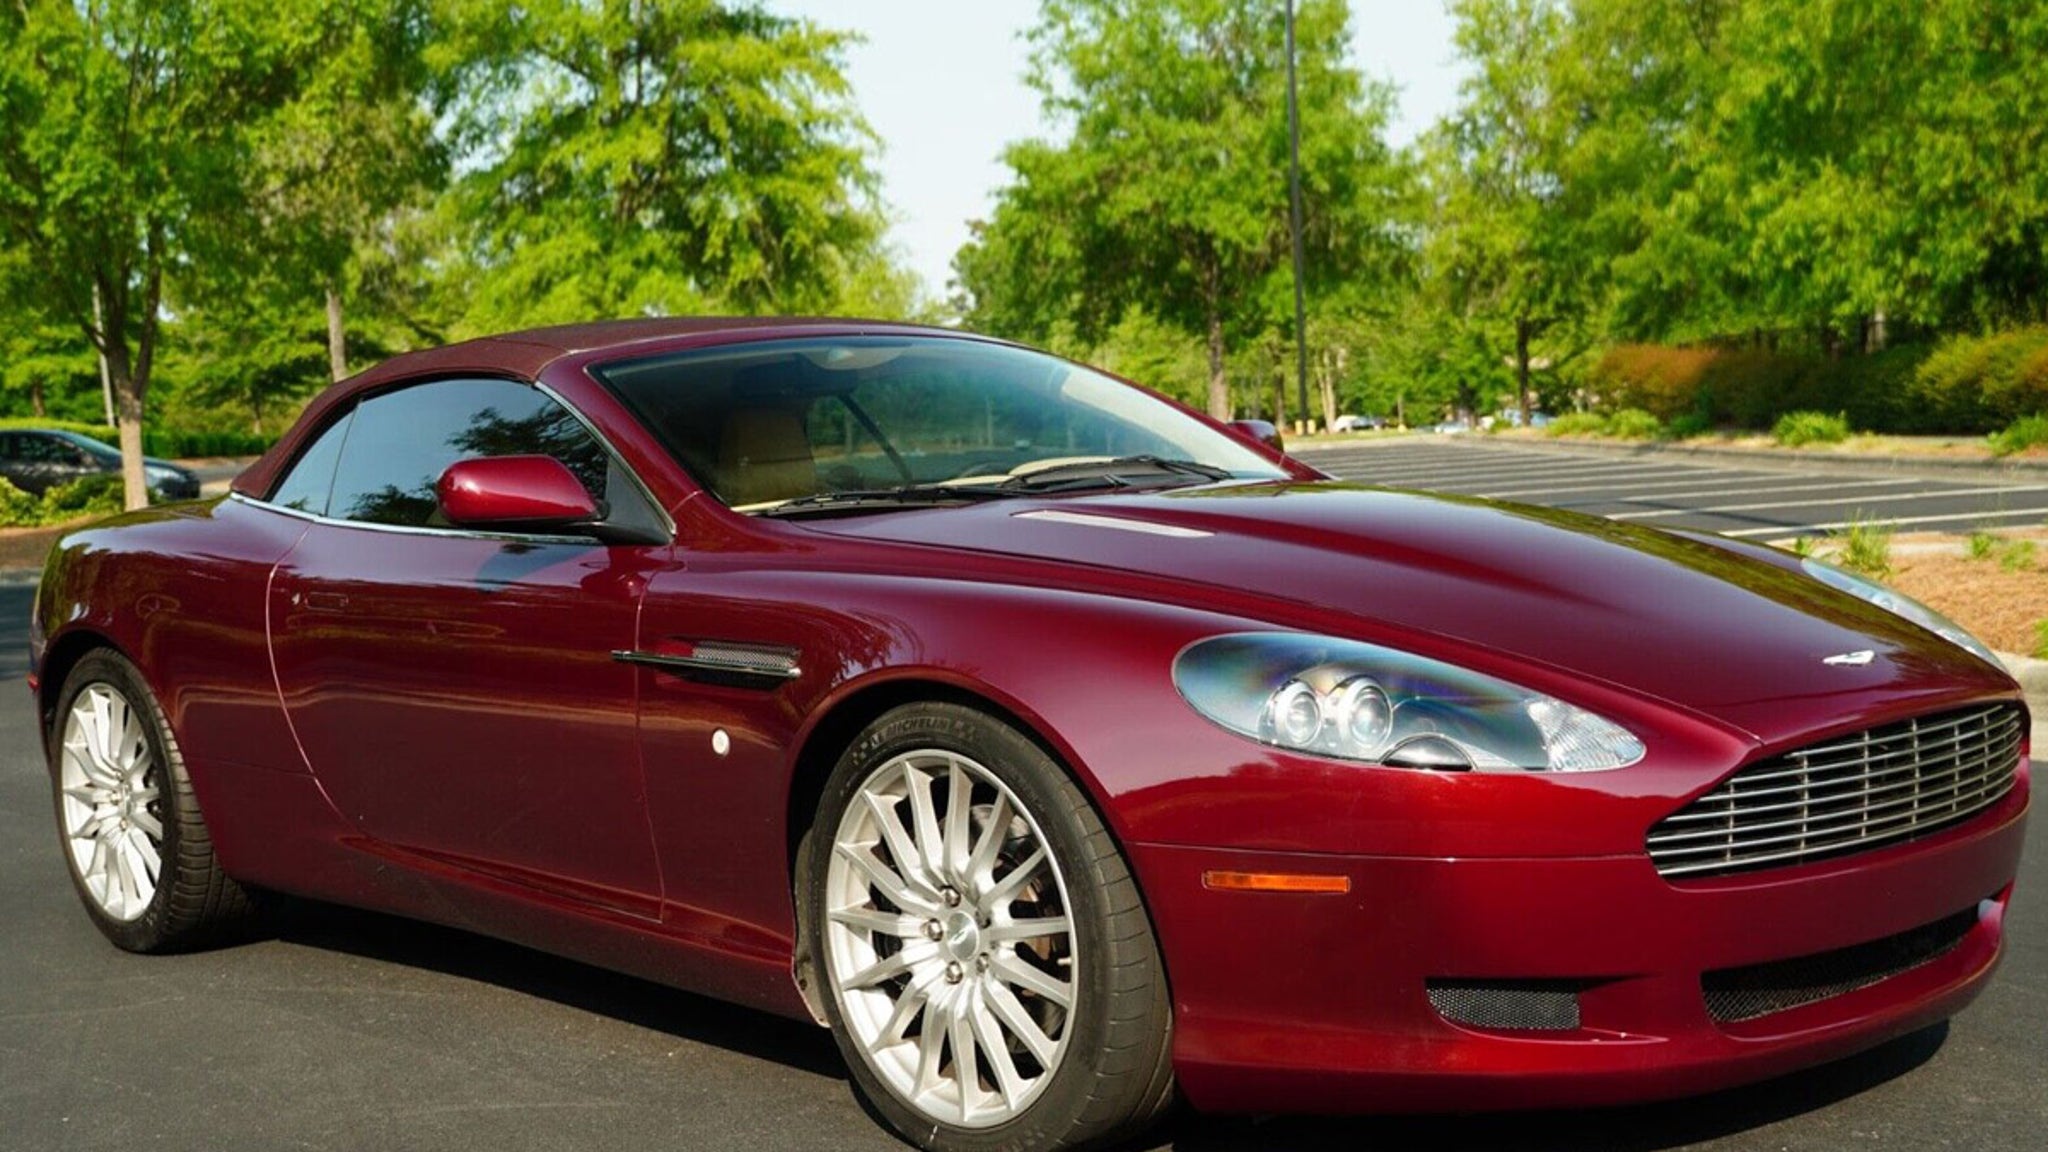 Eva Longoria's 'Desperate Housewives' Aston Martin For Sale thumbnail